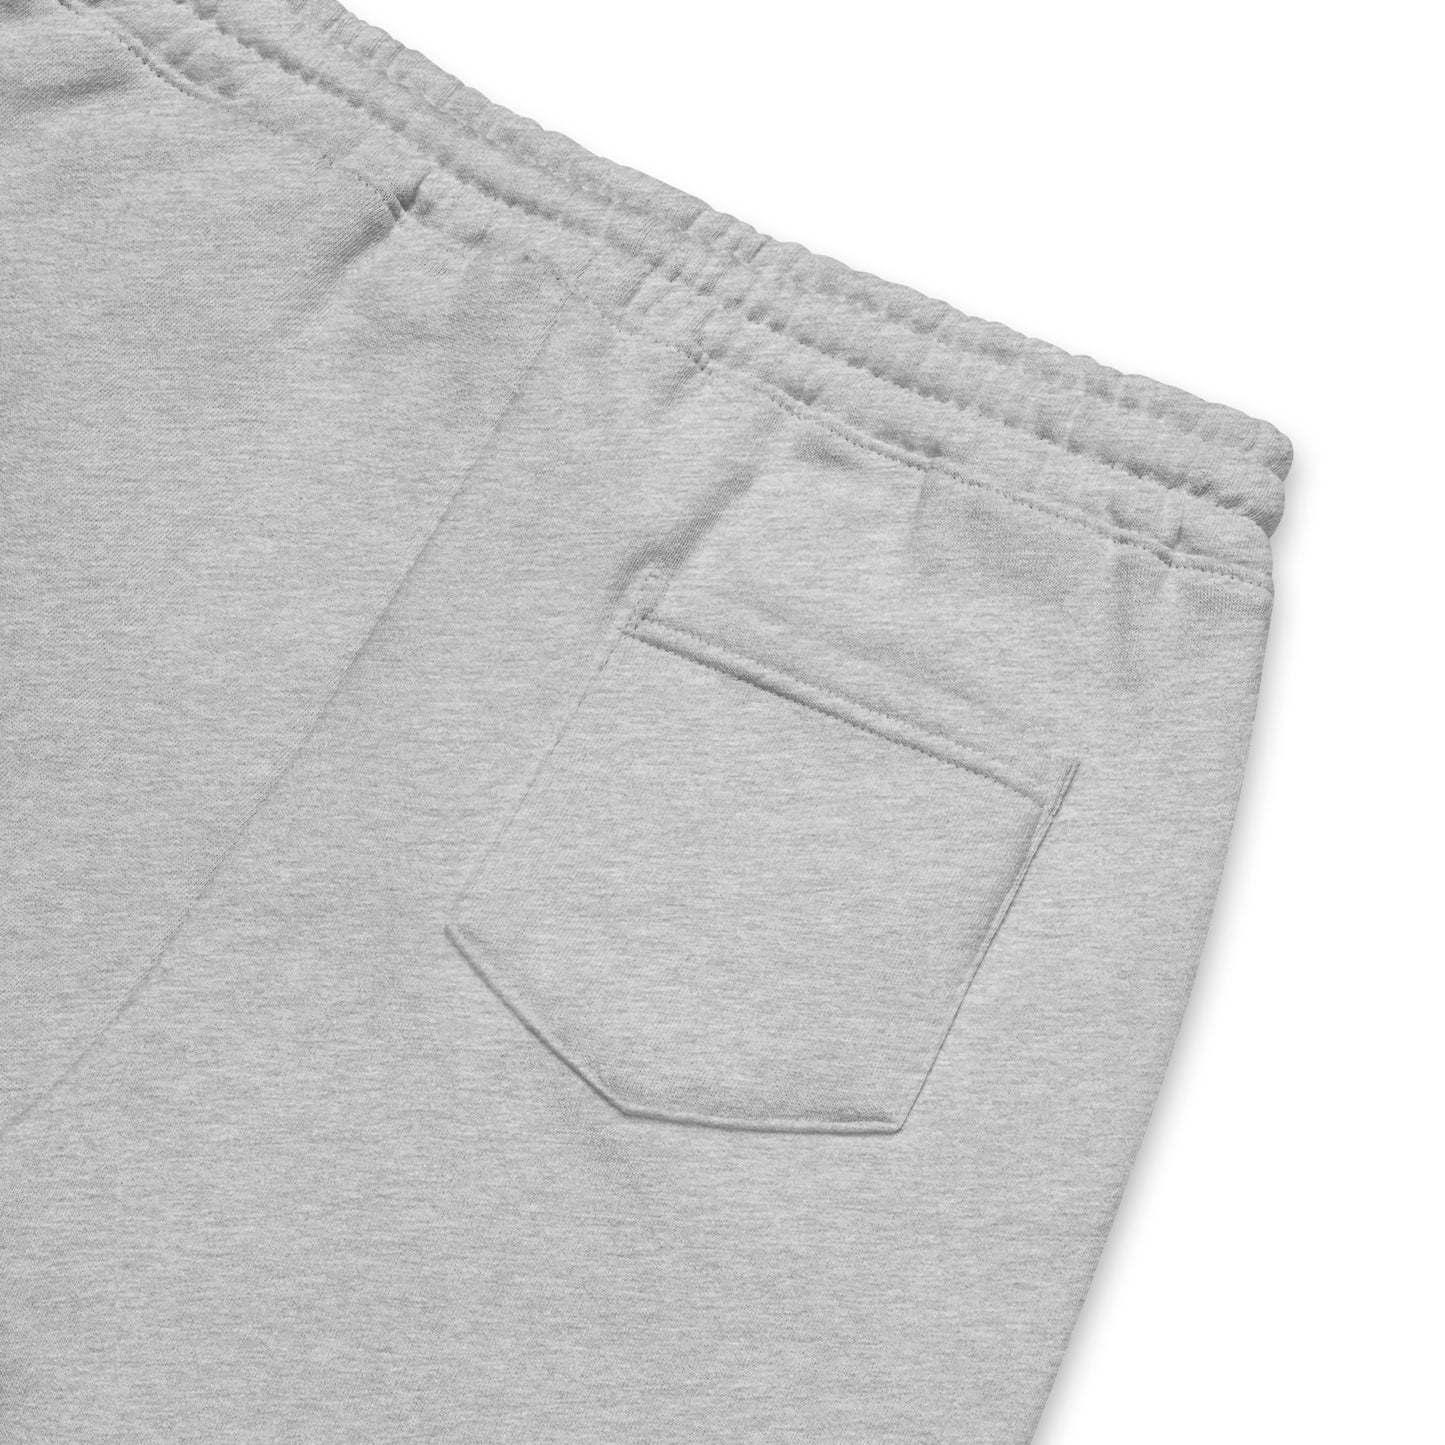 Support Oakland Men's fleece shorts